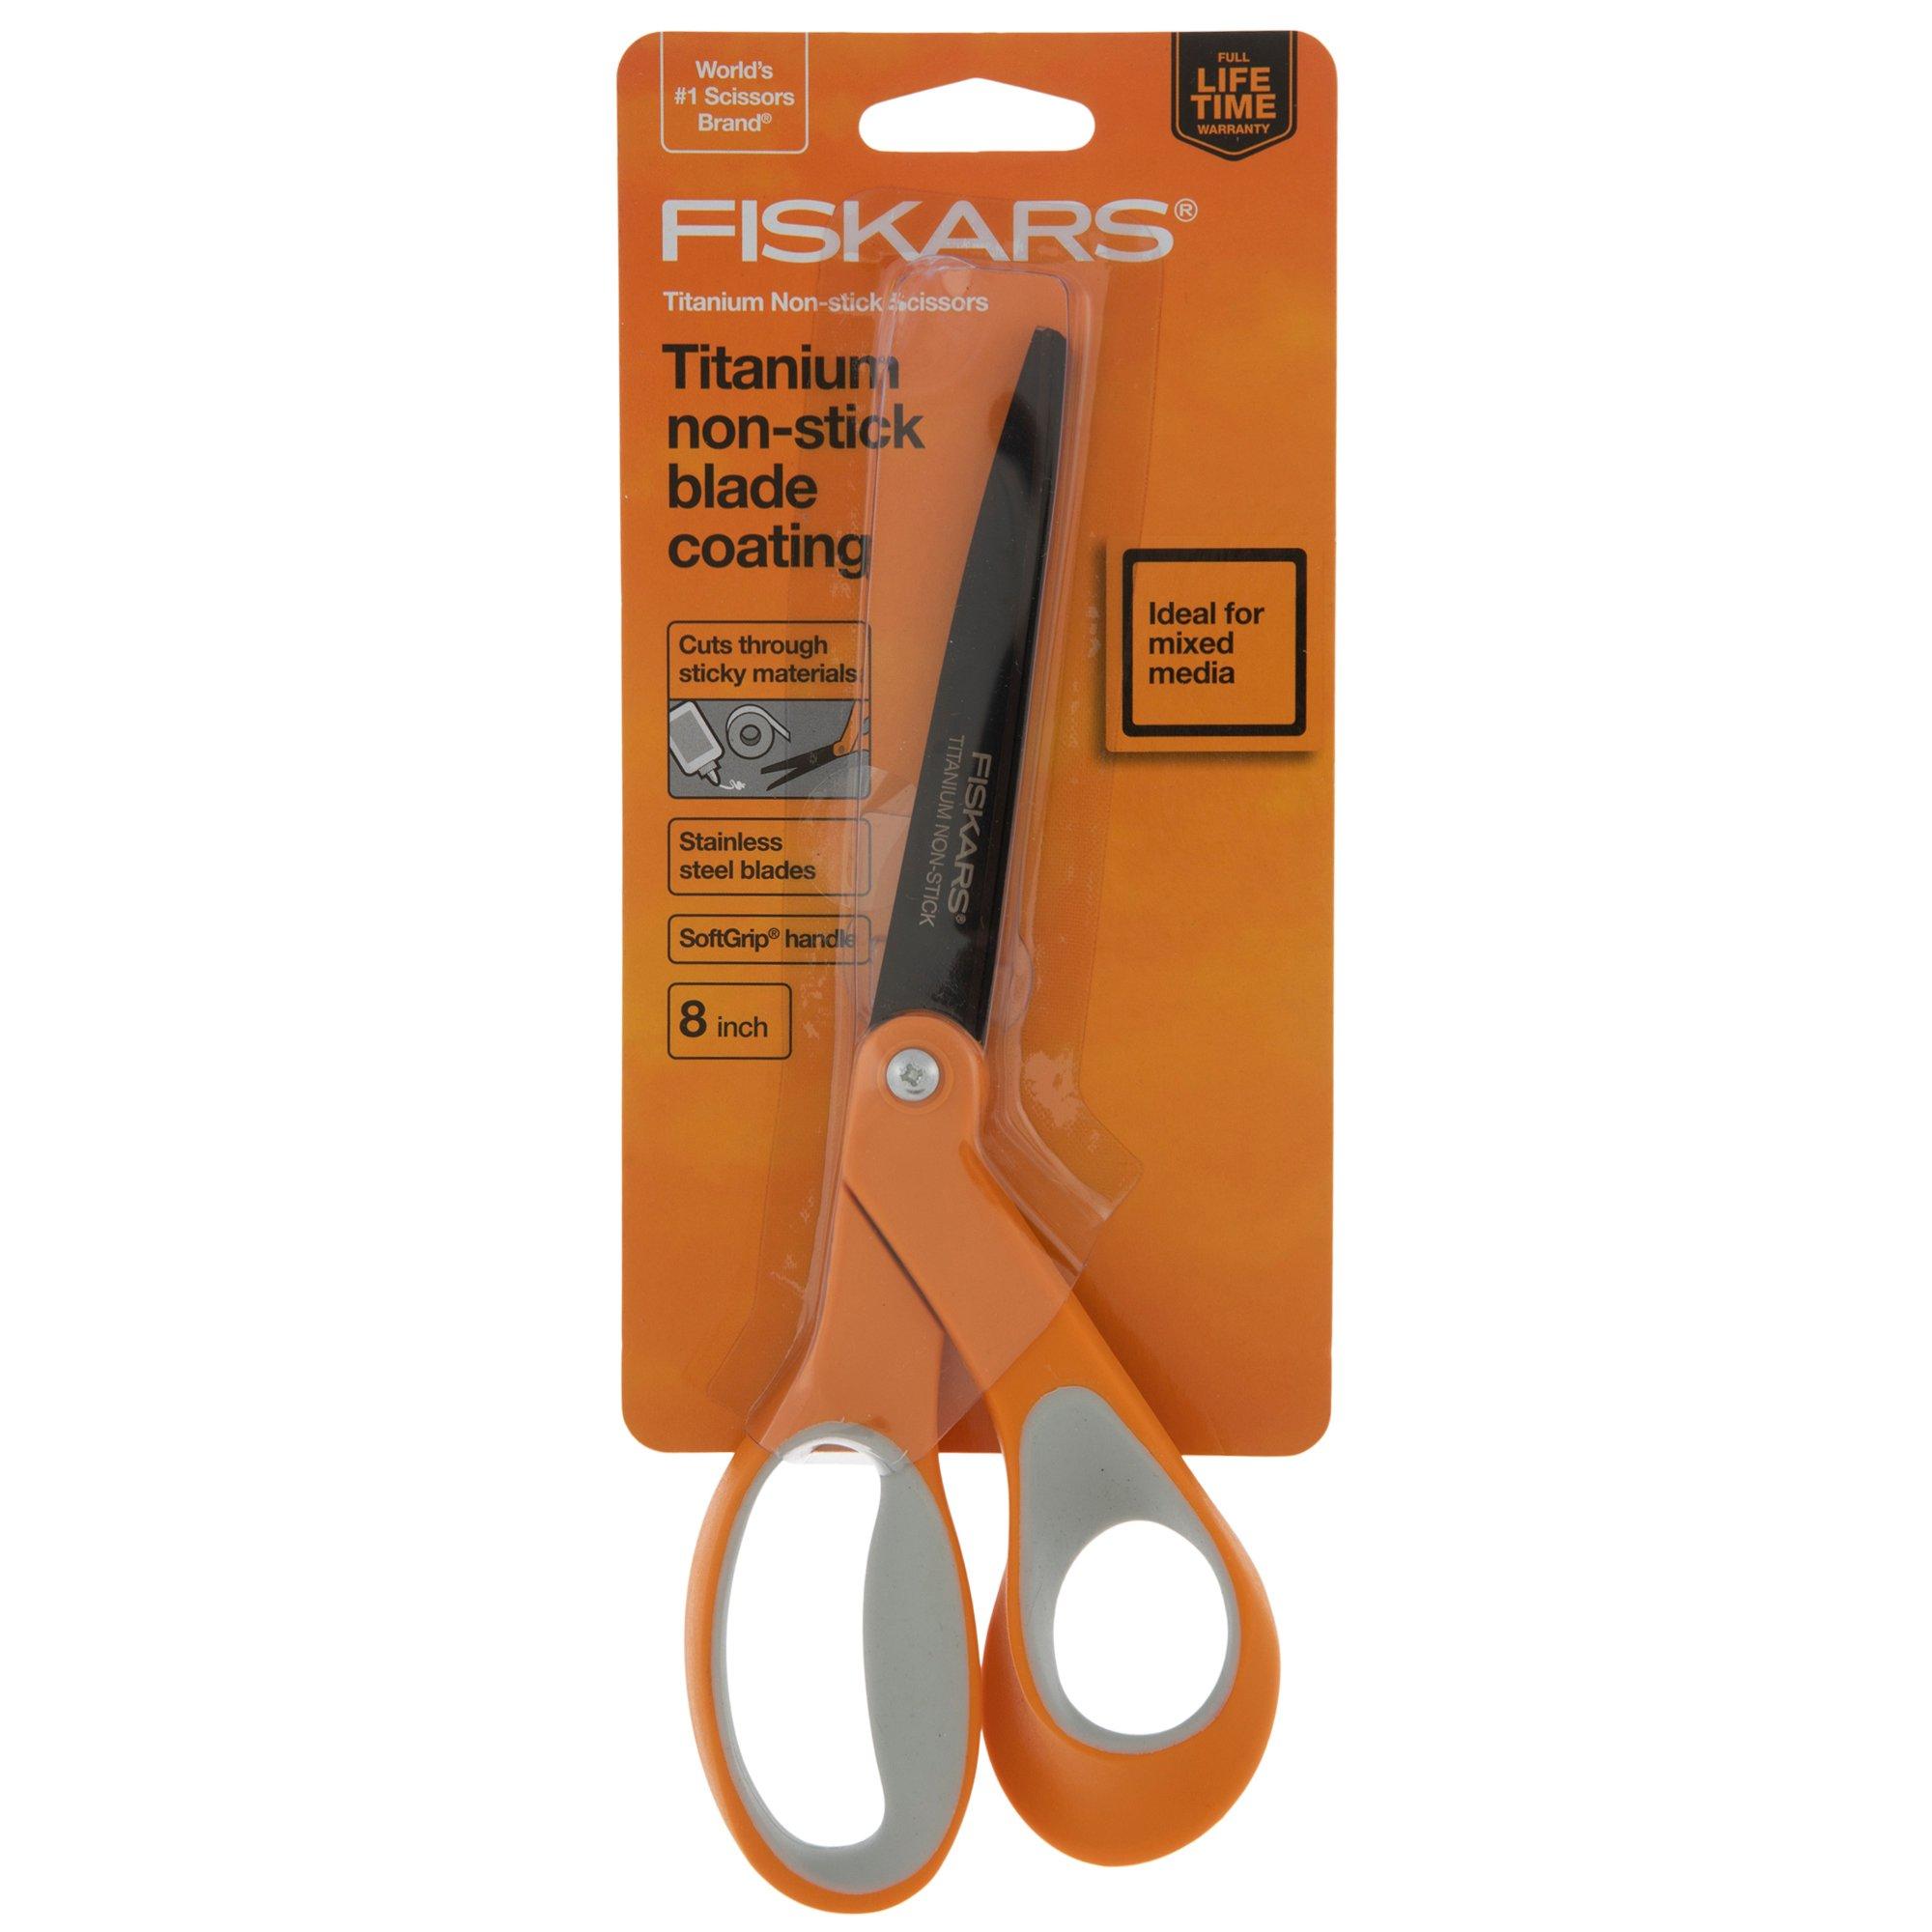 Fiskars LGriffith Scissors 8 Non Stick